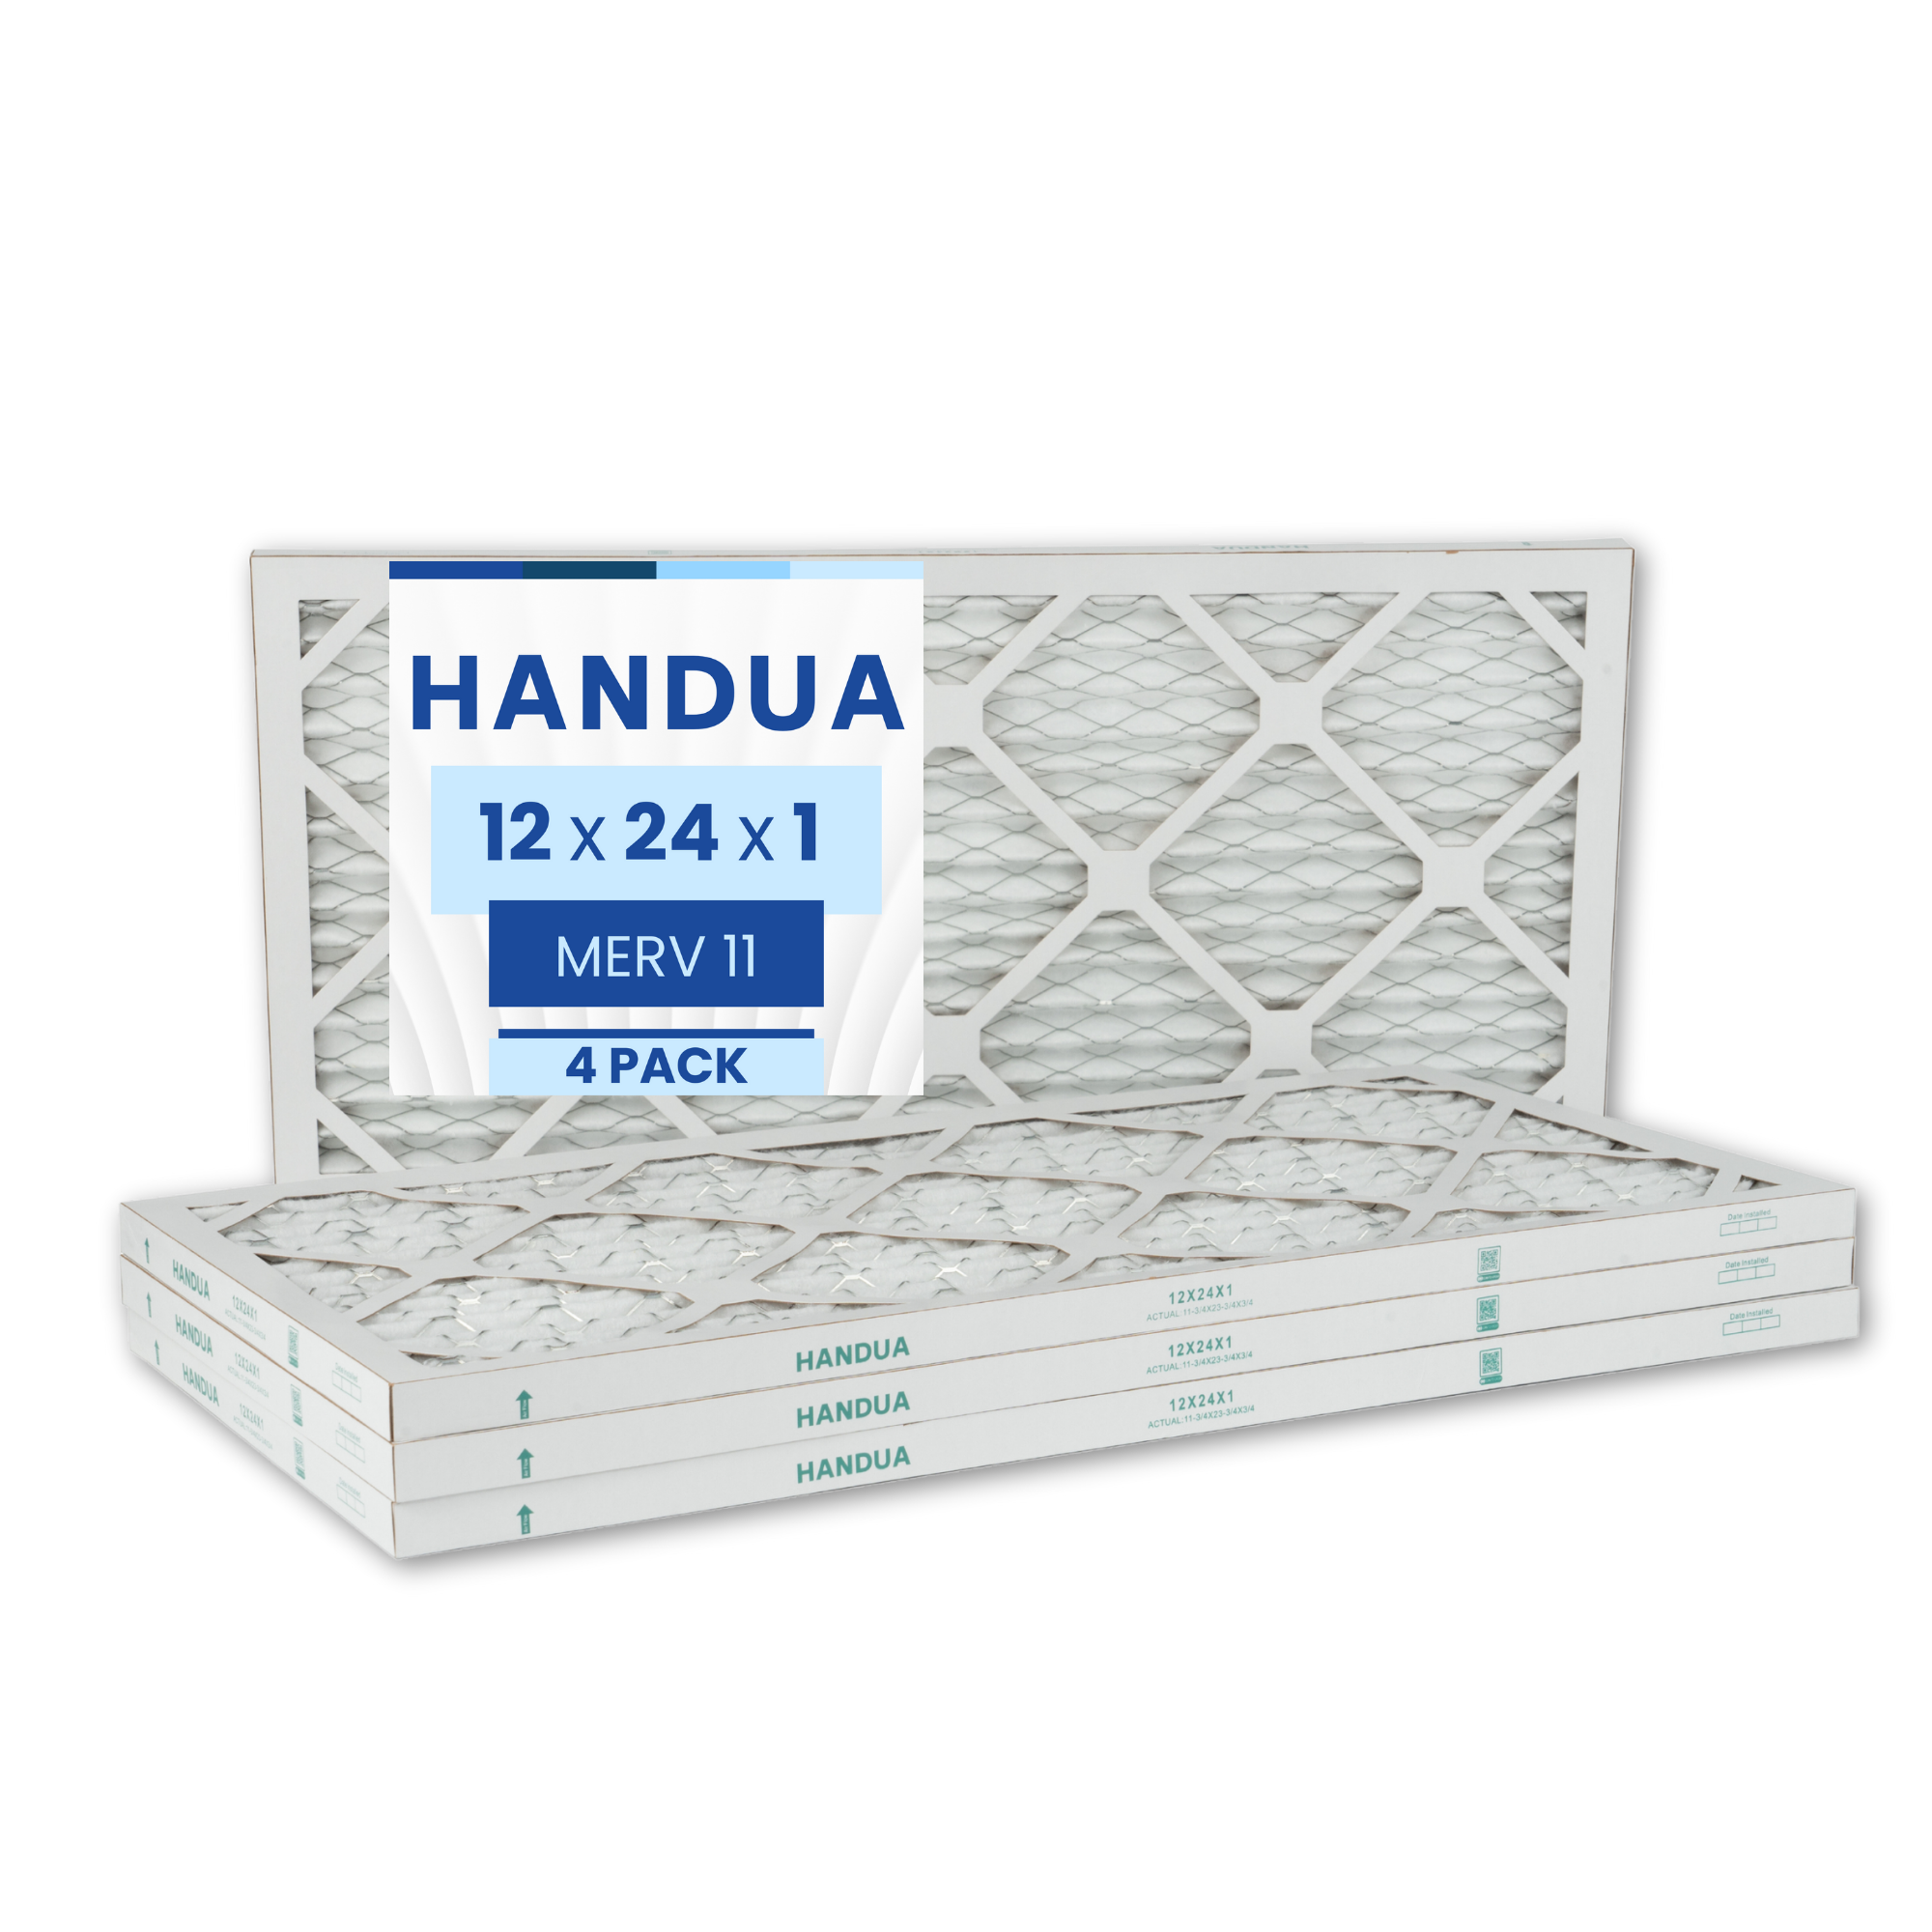 Handua 12x24x1 Air Filter MERV 11 Allergen Control, Plated Furnace AC Air Replacement Filter, 4 Pack (Actual Size: 11.75" x 23.75" x 0.75")